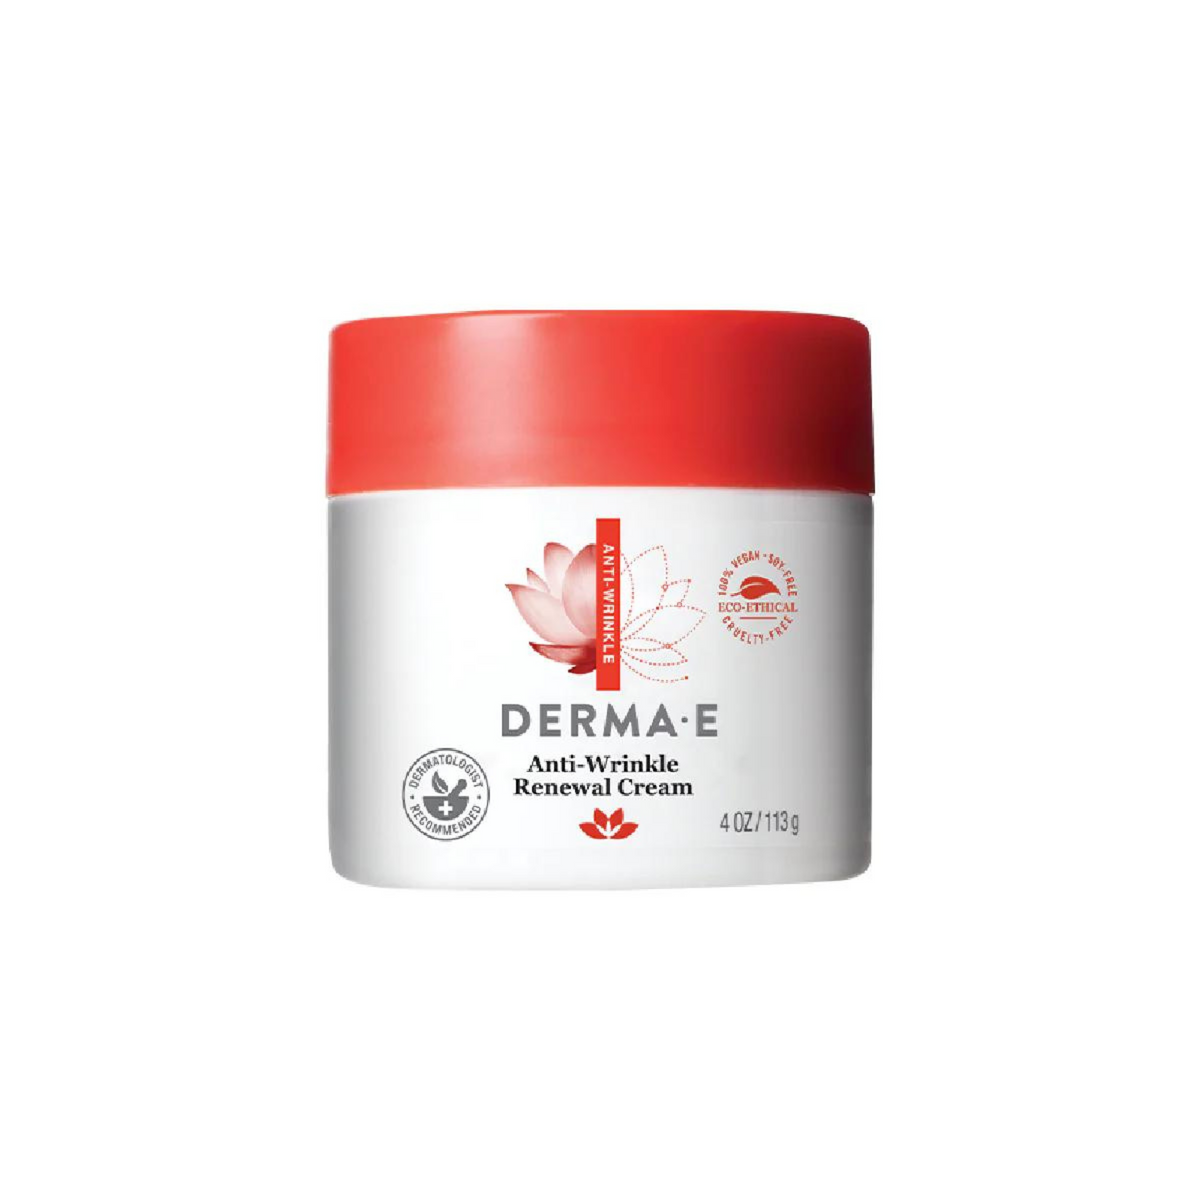 Primary Image of DERMA E Anti-Wrinkle Renewal Cream (4 oz)